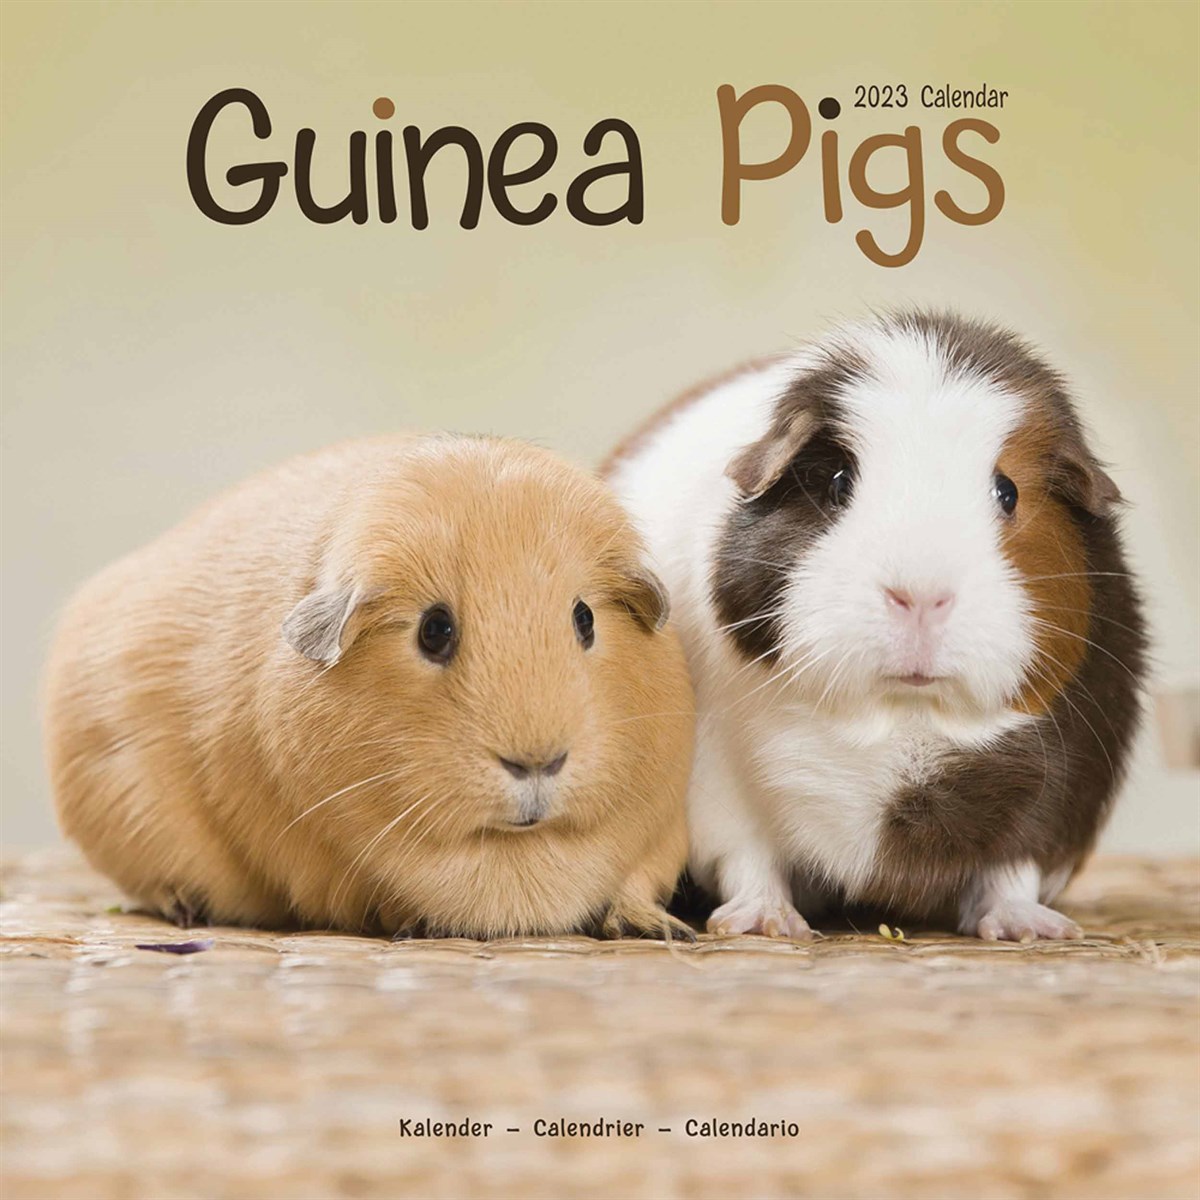 Guinea Pigs 2023 Calendars